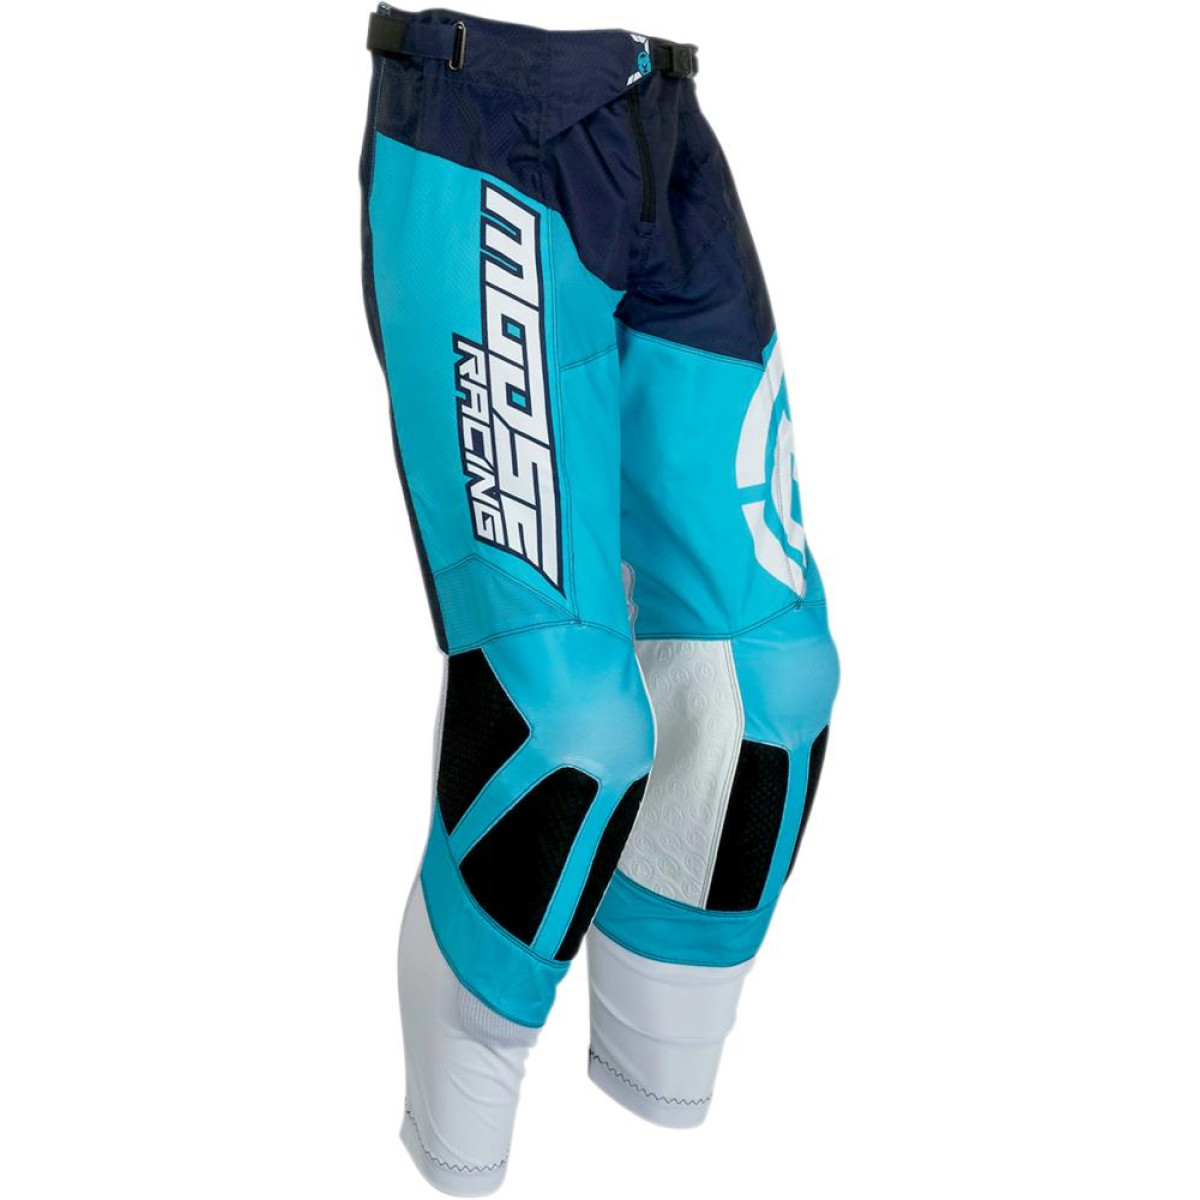 Pantaloni Motocross Moose Racing M1 Albastru/alb Marime 32